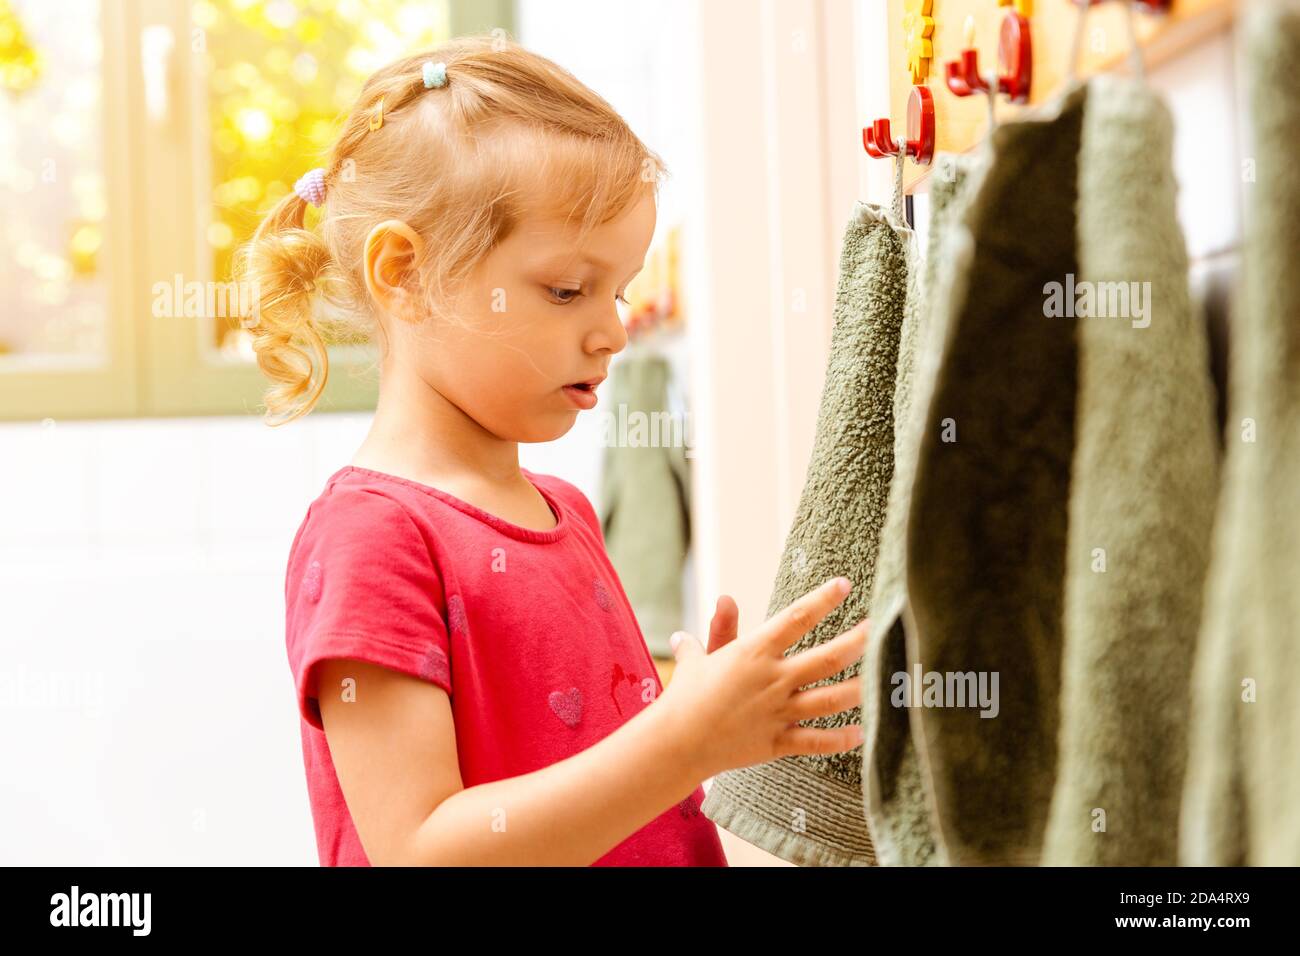 Little girl in nursery school using towel in bathroom Stock Photo